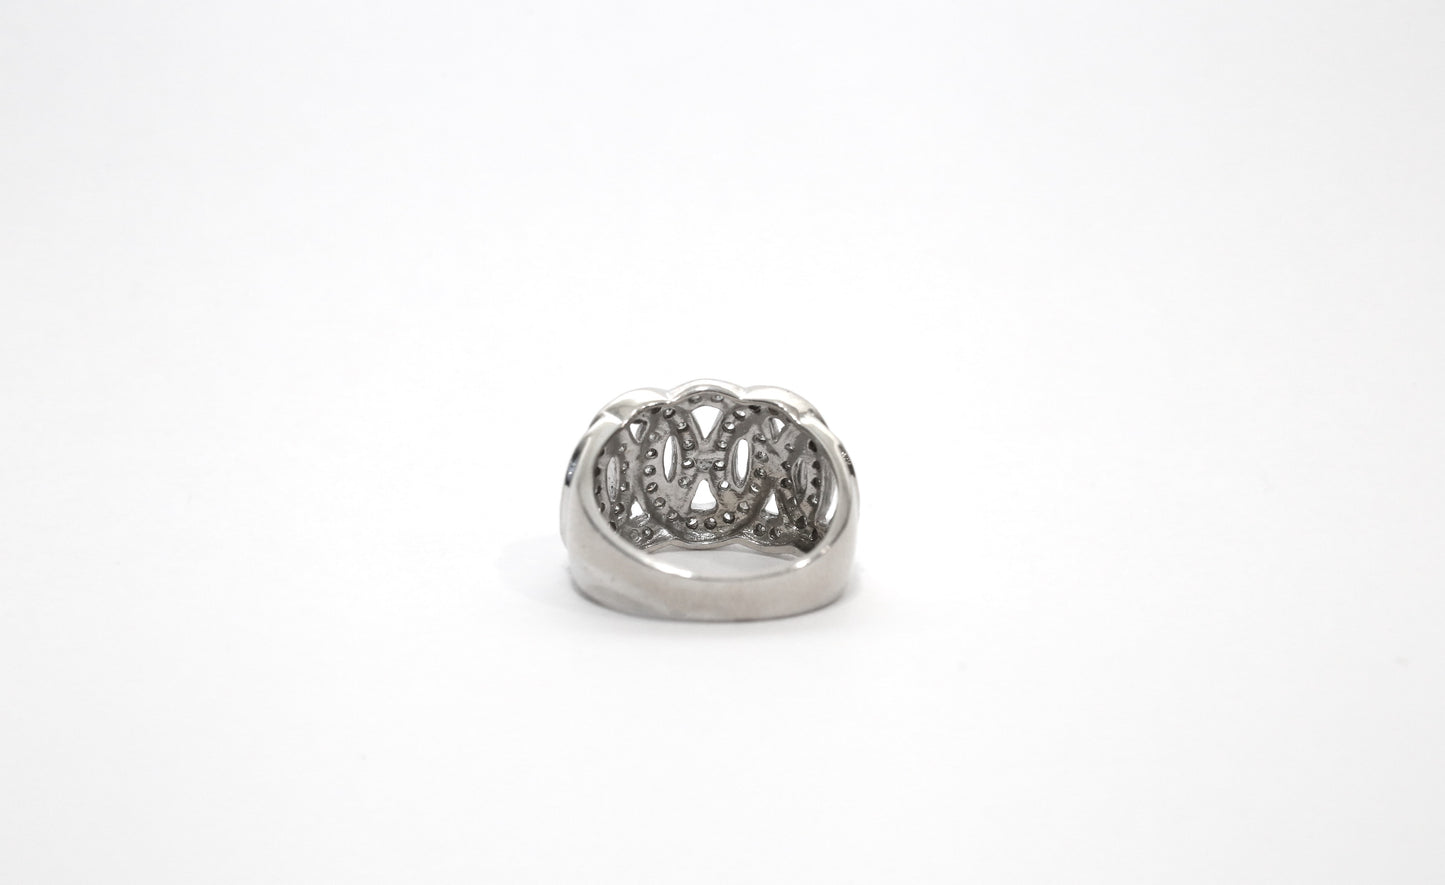 14k White Gold Multi-Diamond Ring, Size 5.5 - 5.0g